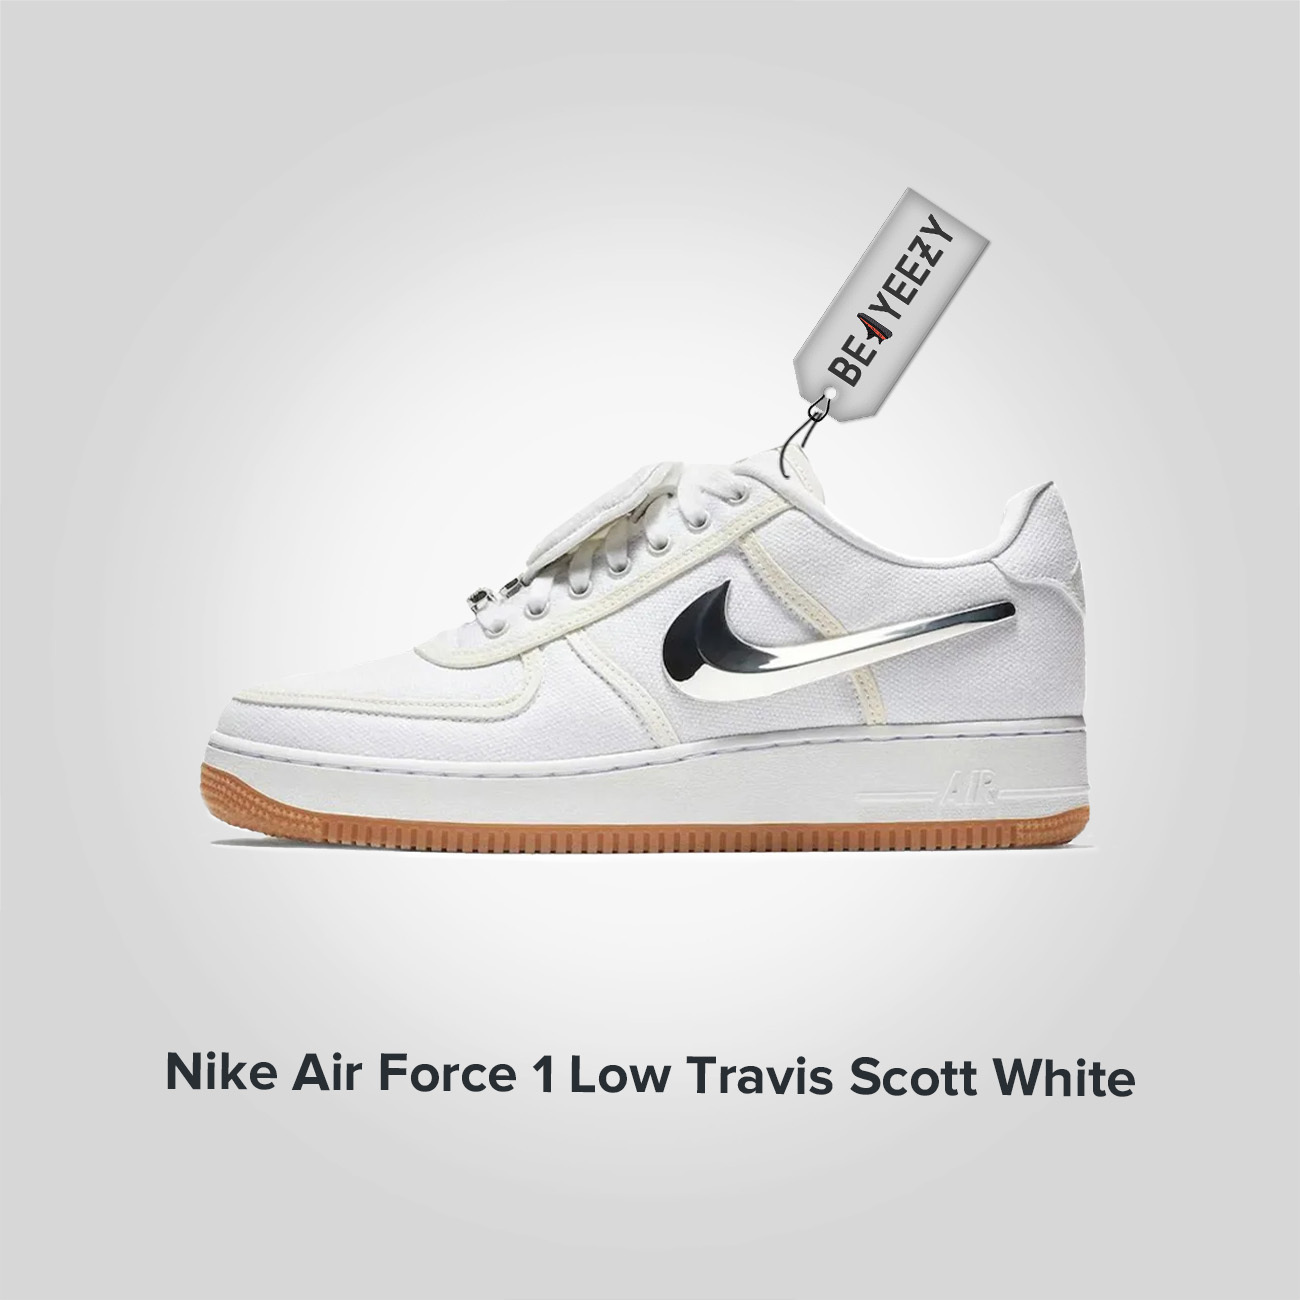 Nike Air Force 1 Low Travis Scott White